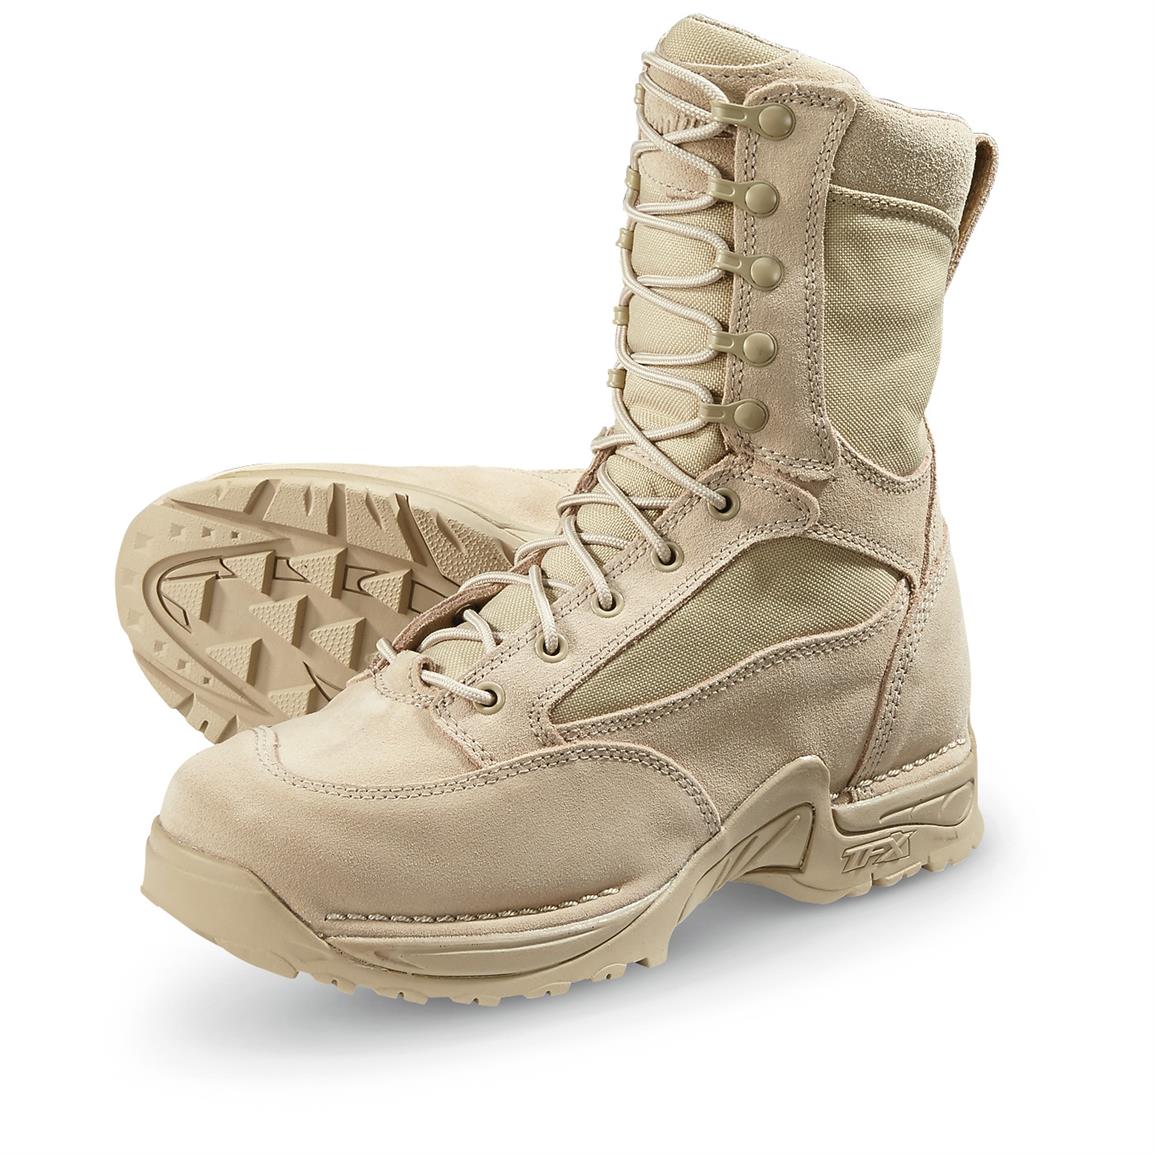 Danner Desert TFX Rough-out GORE-TEX Boots - 643164, Combat & Tactical